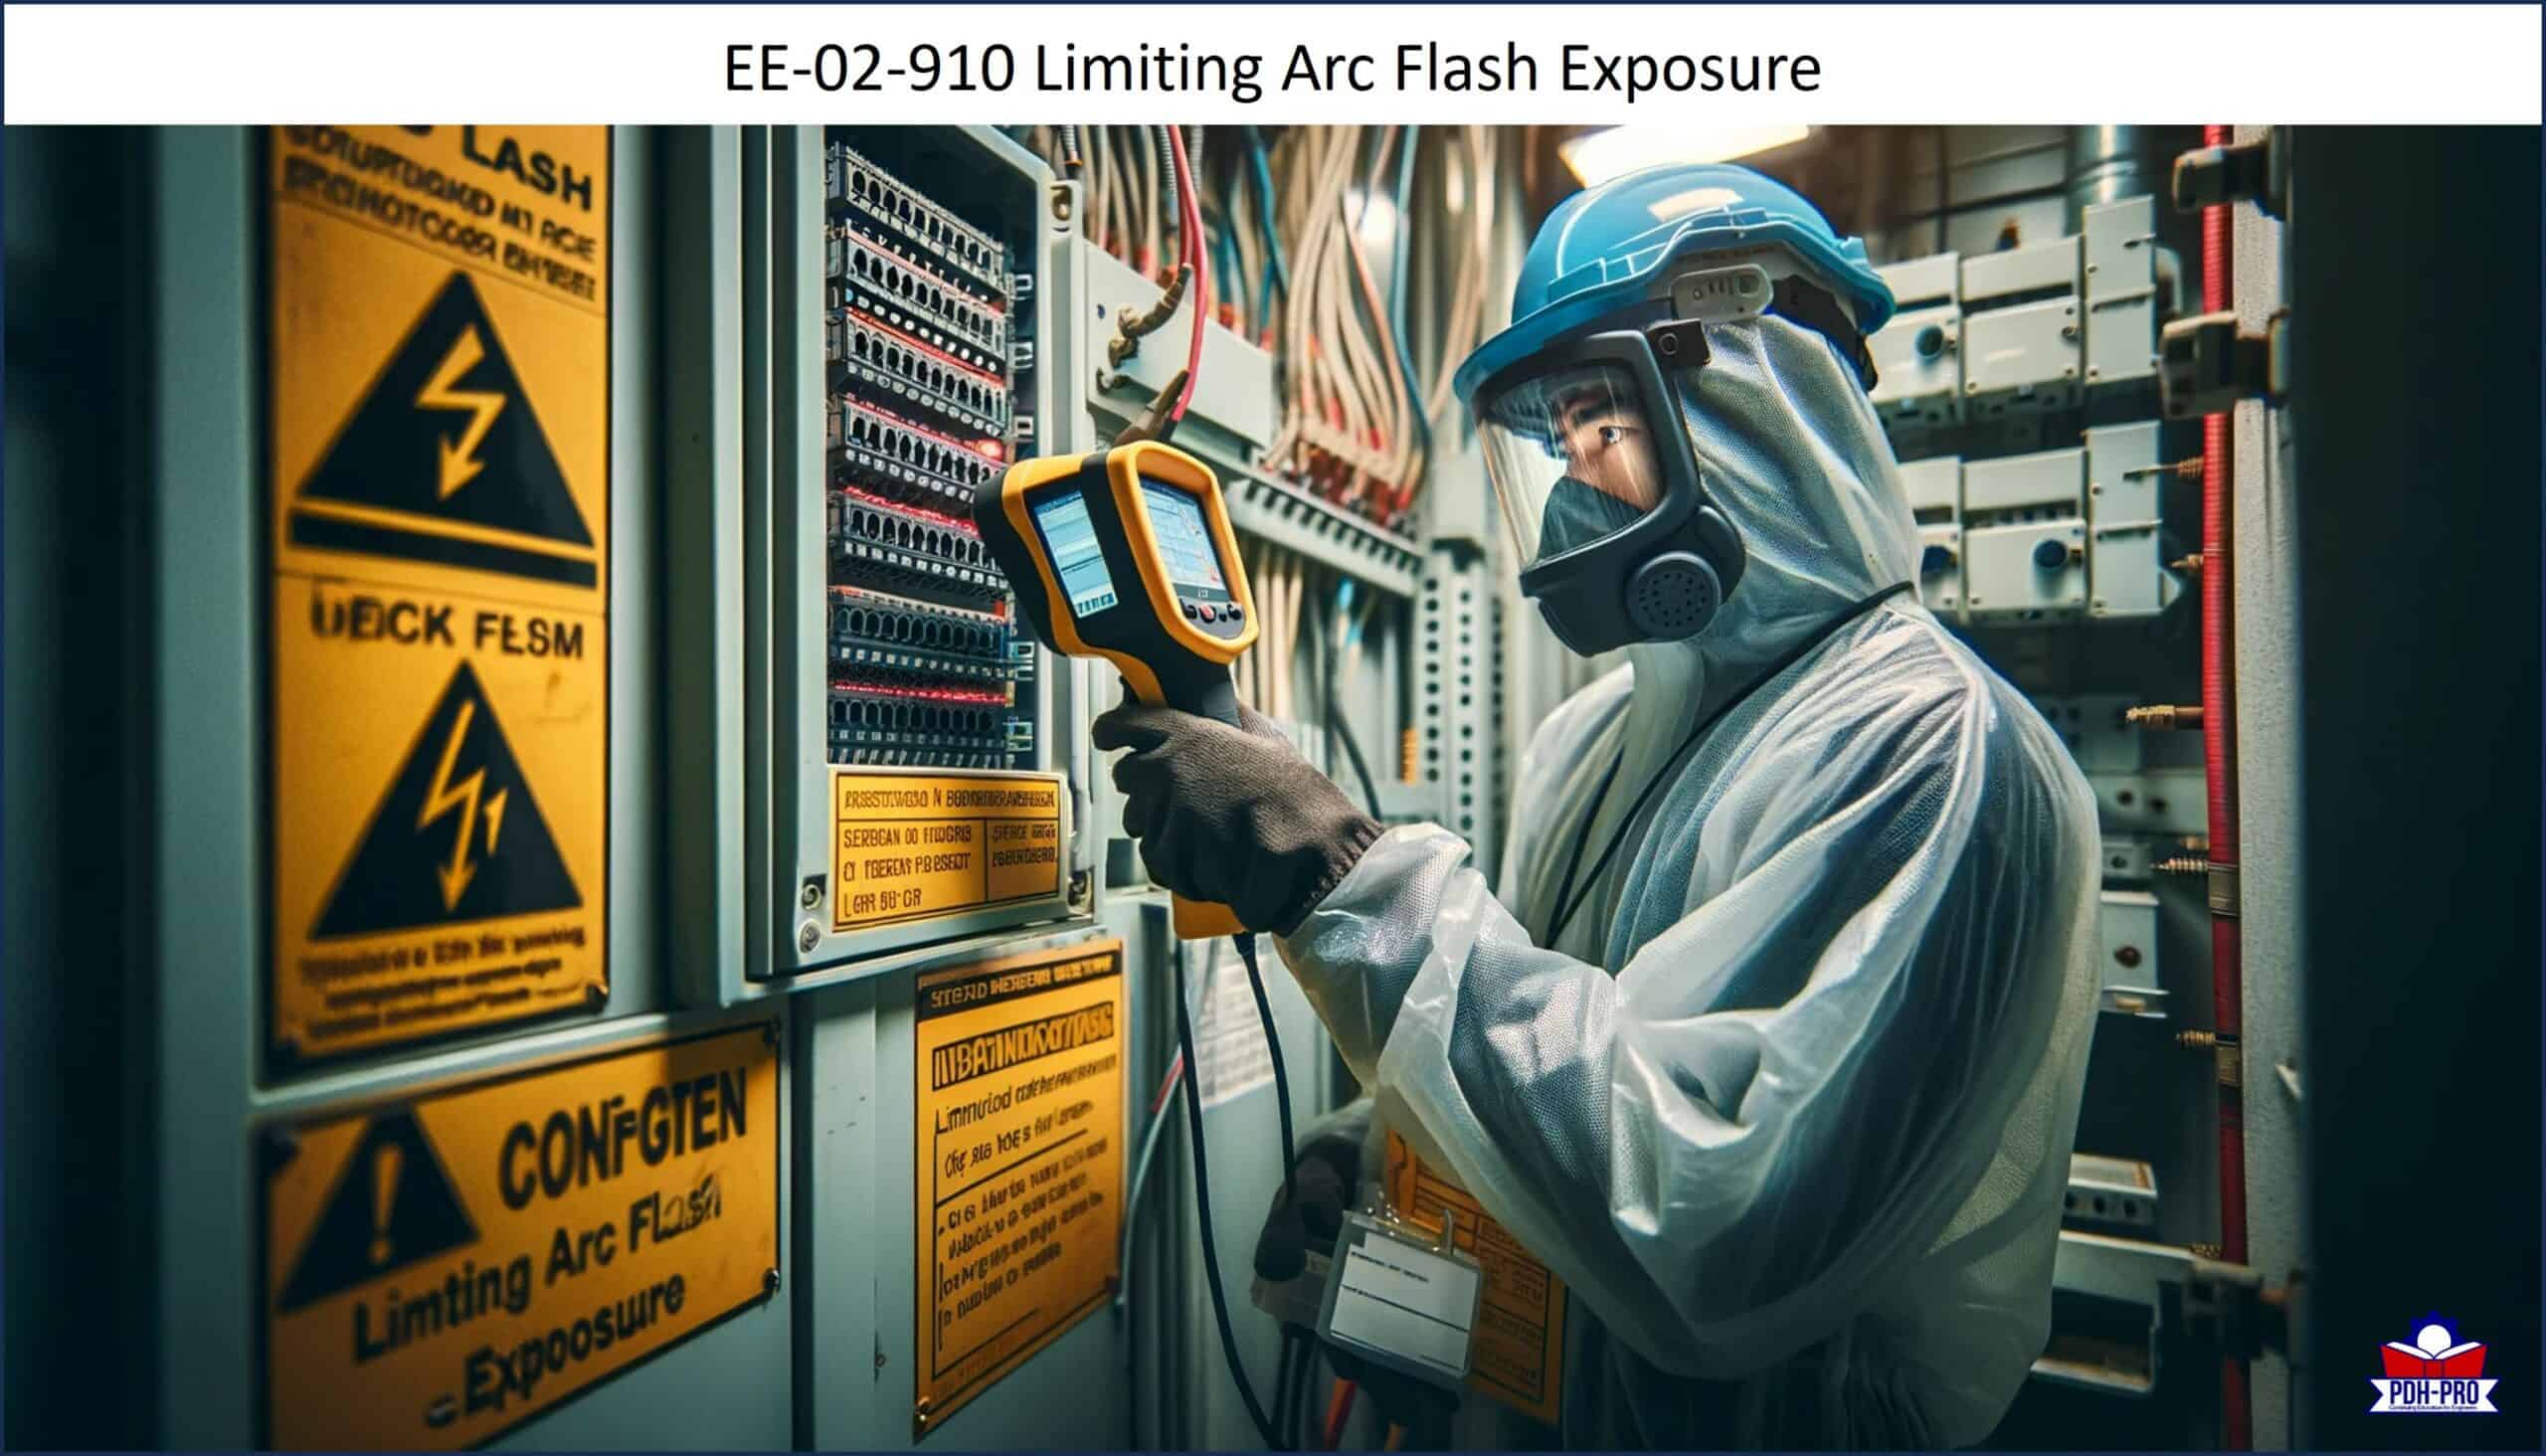 Limiting Arc Flash Exposure